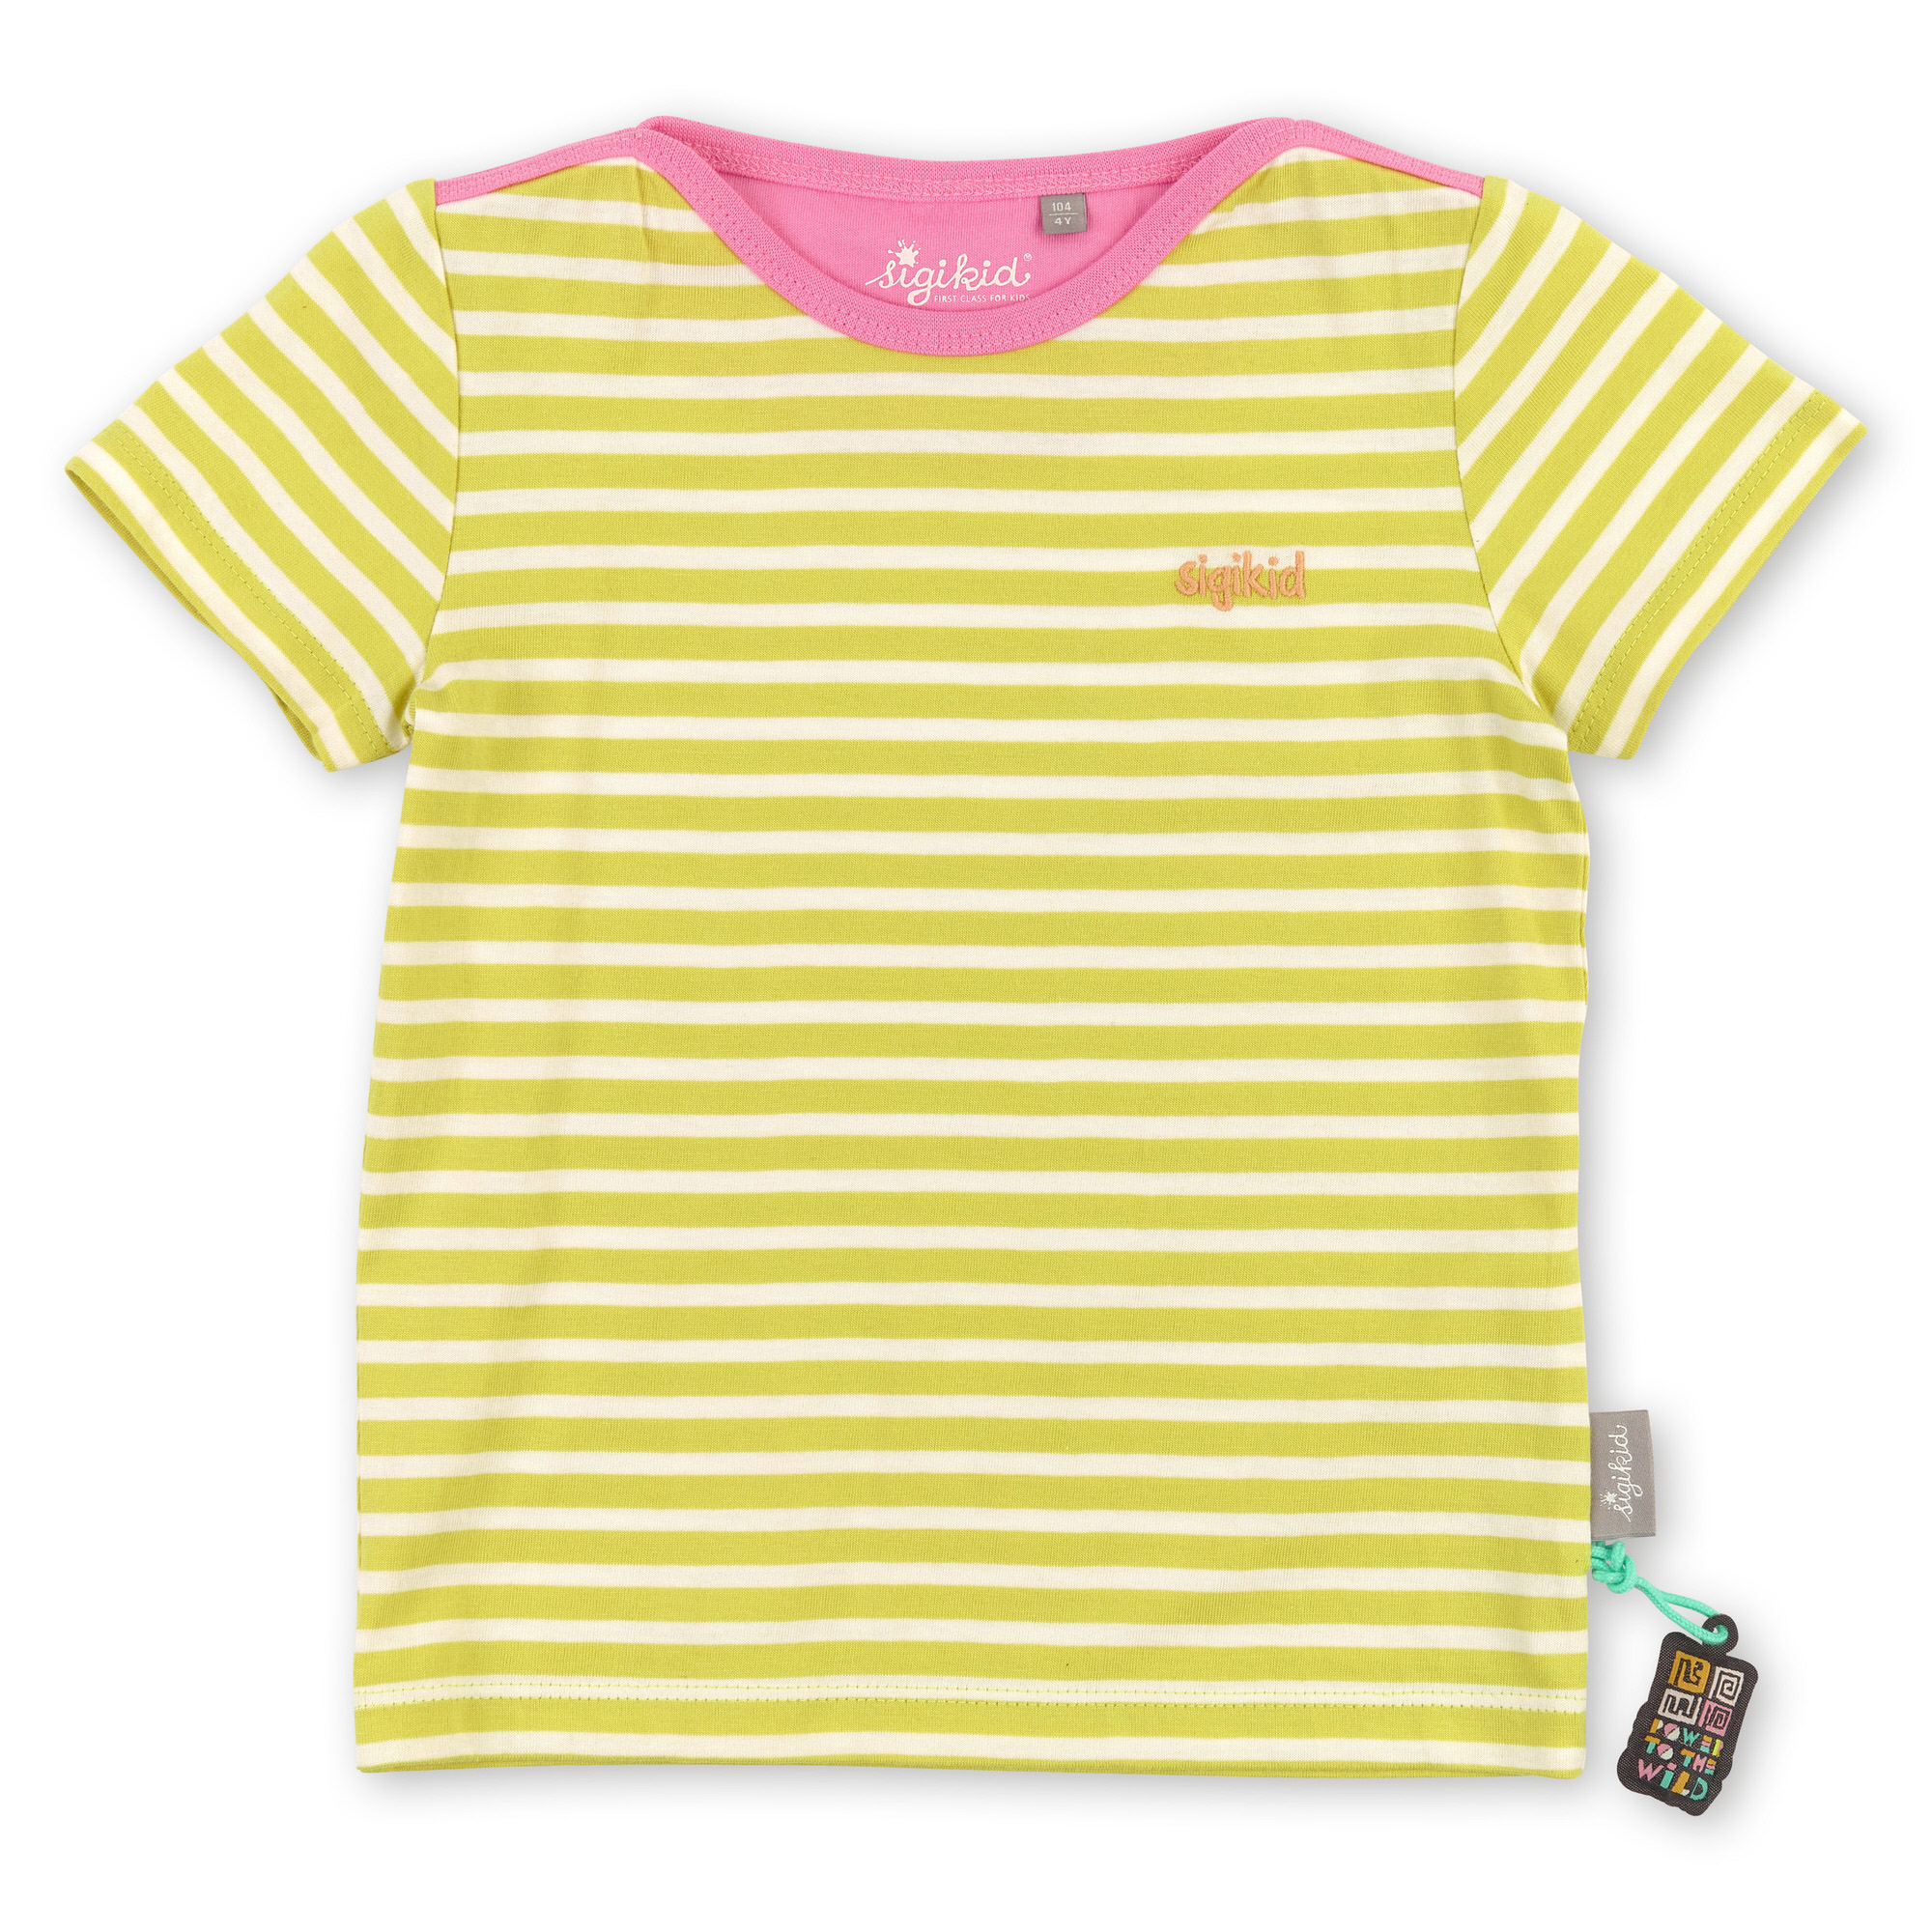 Yellow/white striped girls' T-shirt, pink shoulder trimming